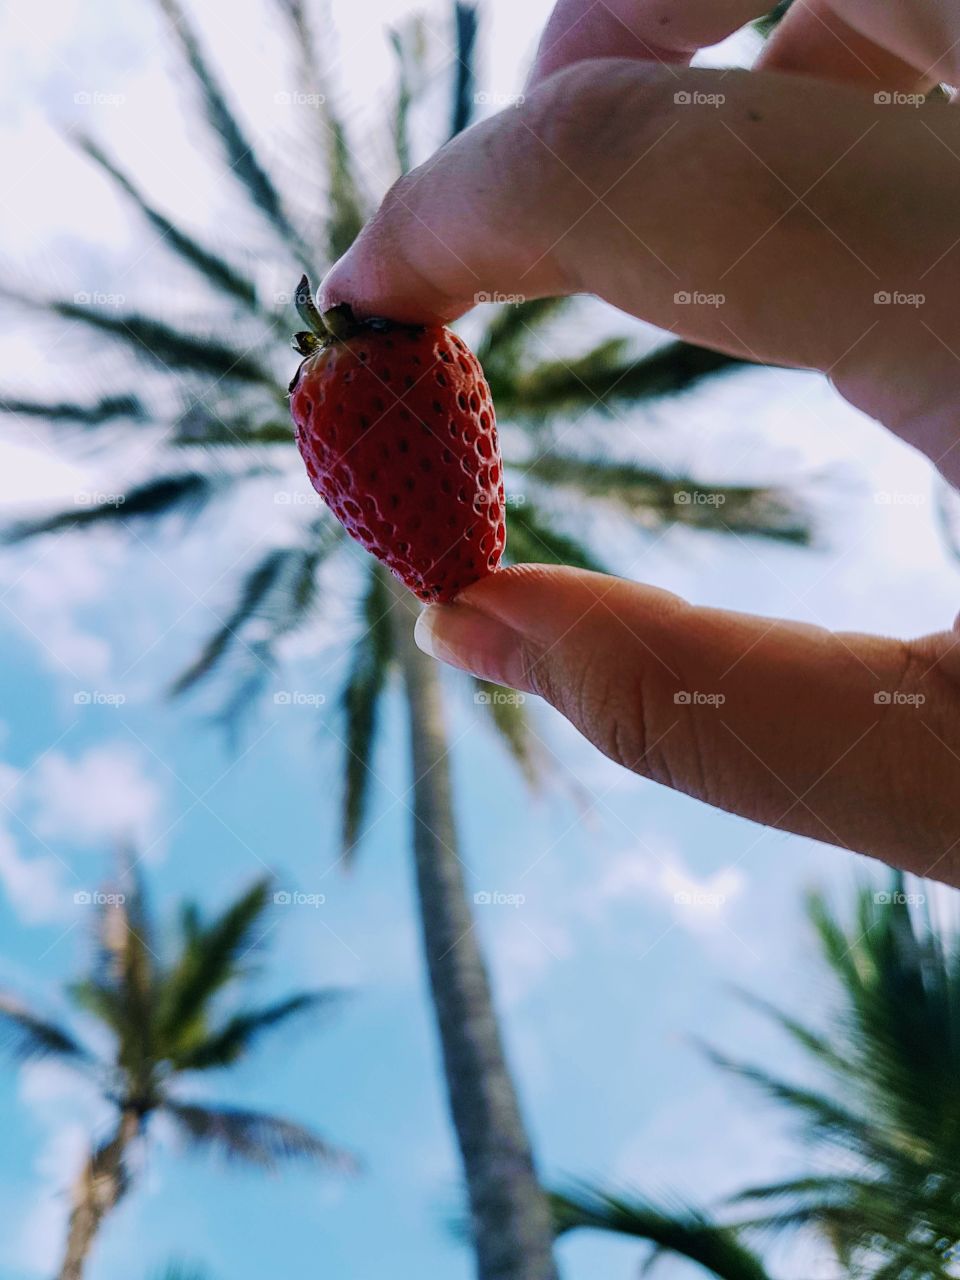 Strawberries on the beach!